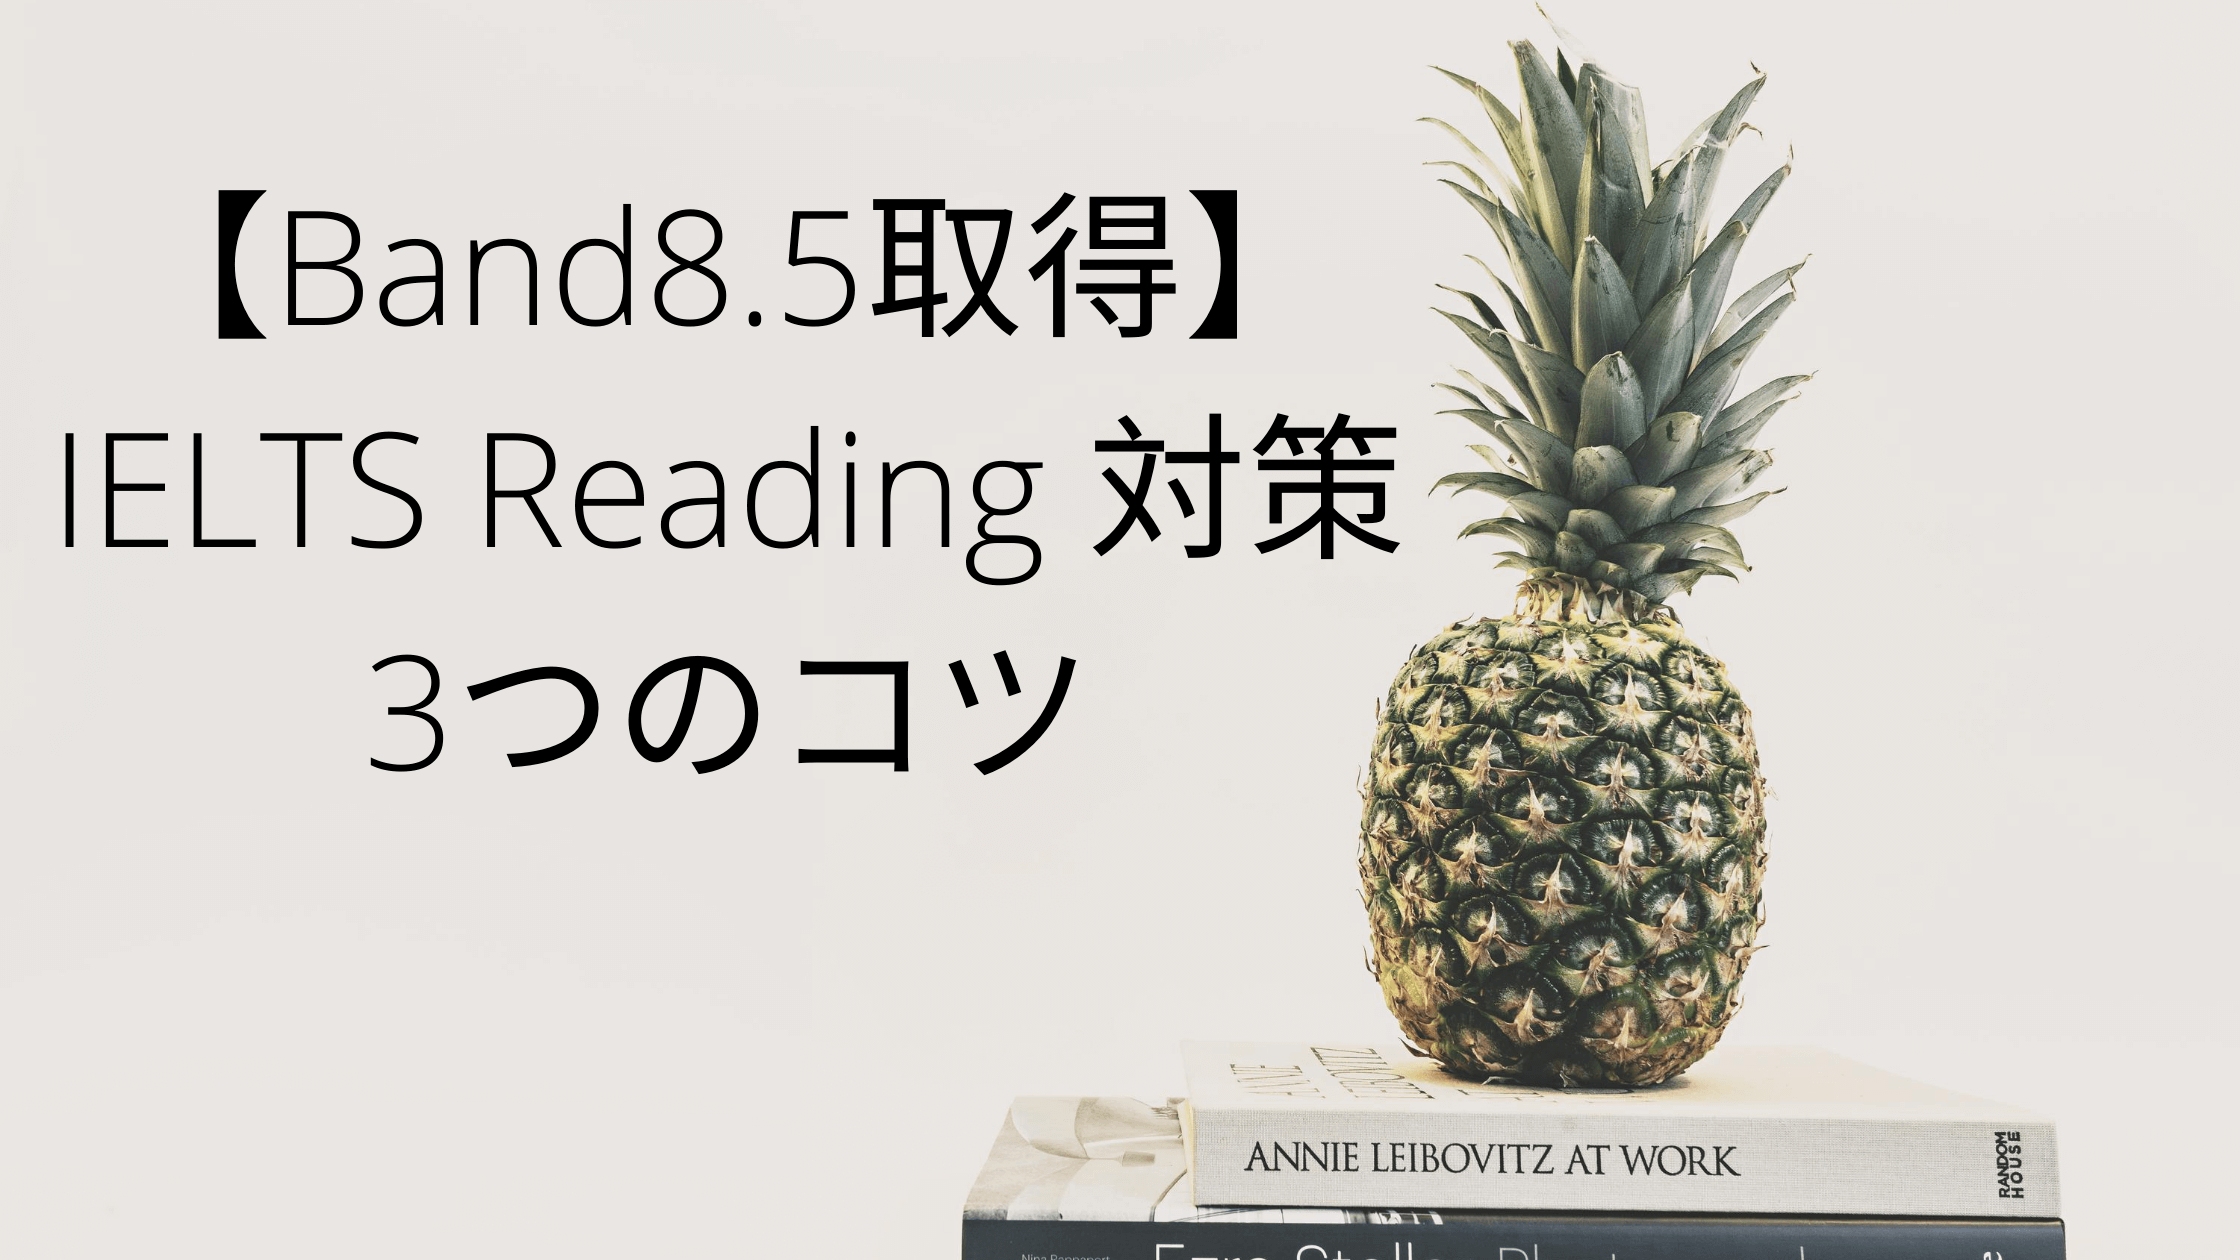 reading band8.5